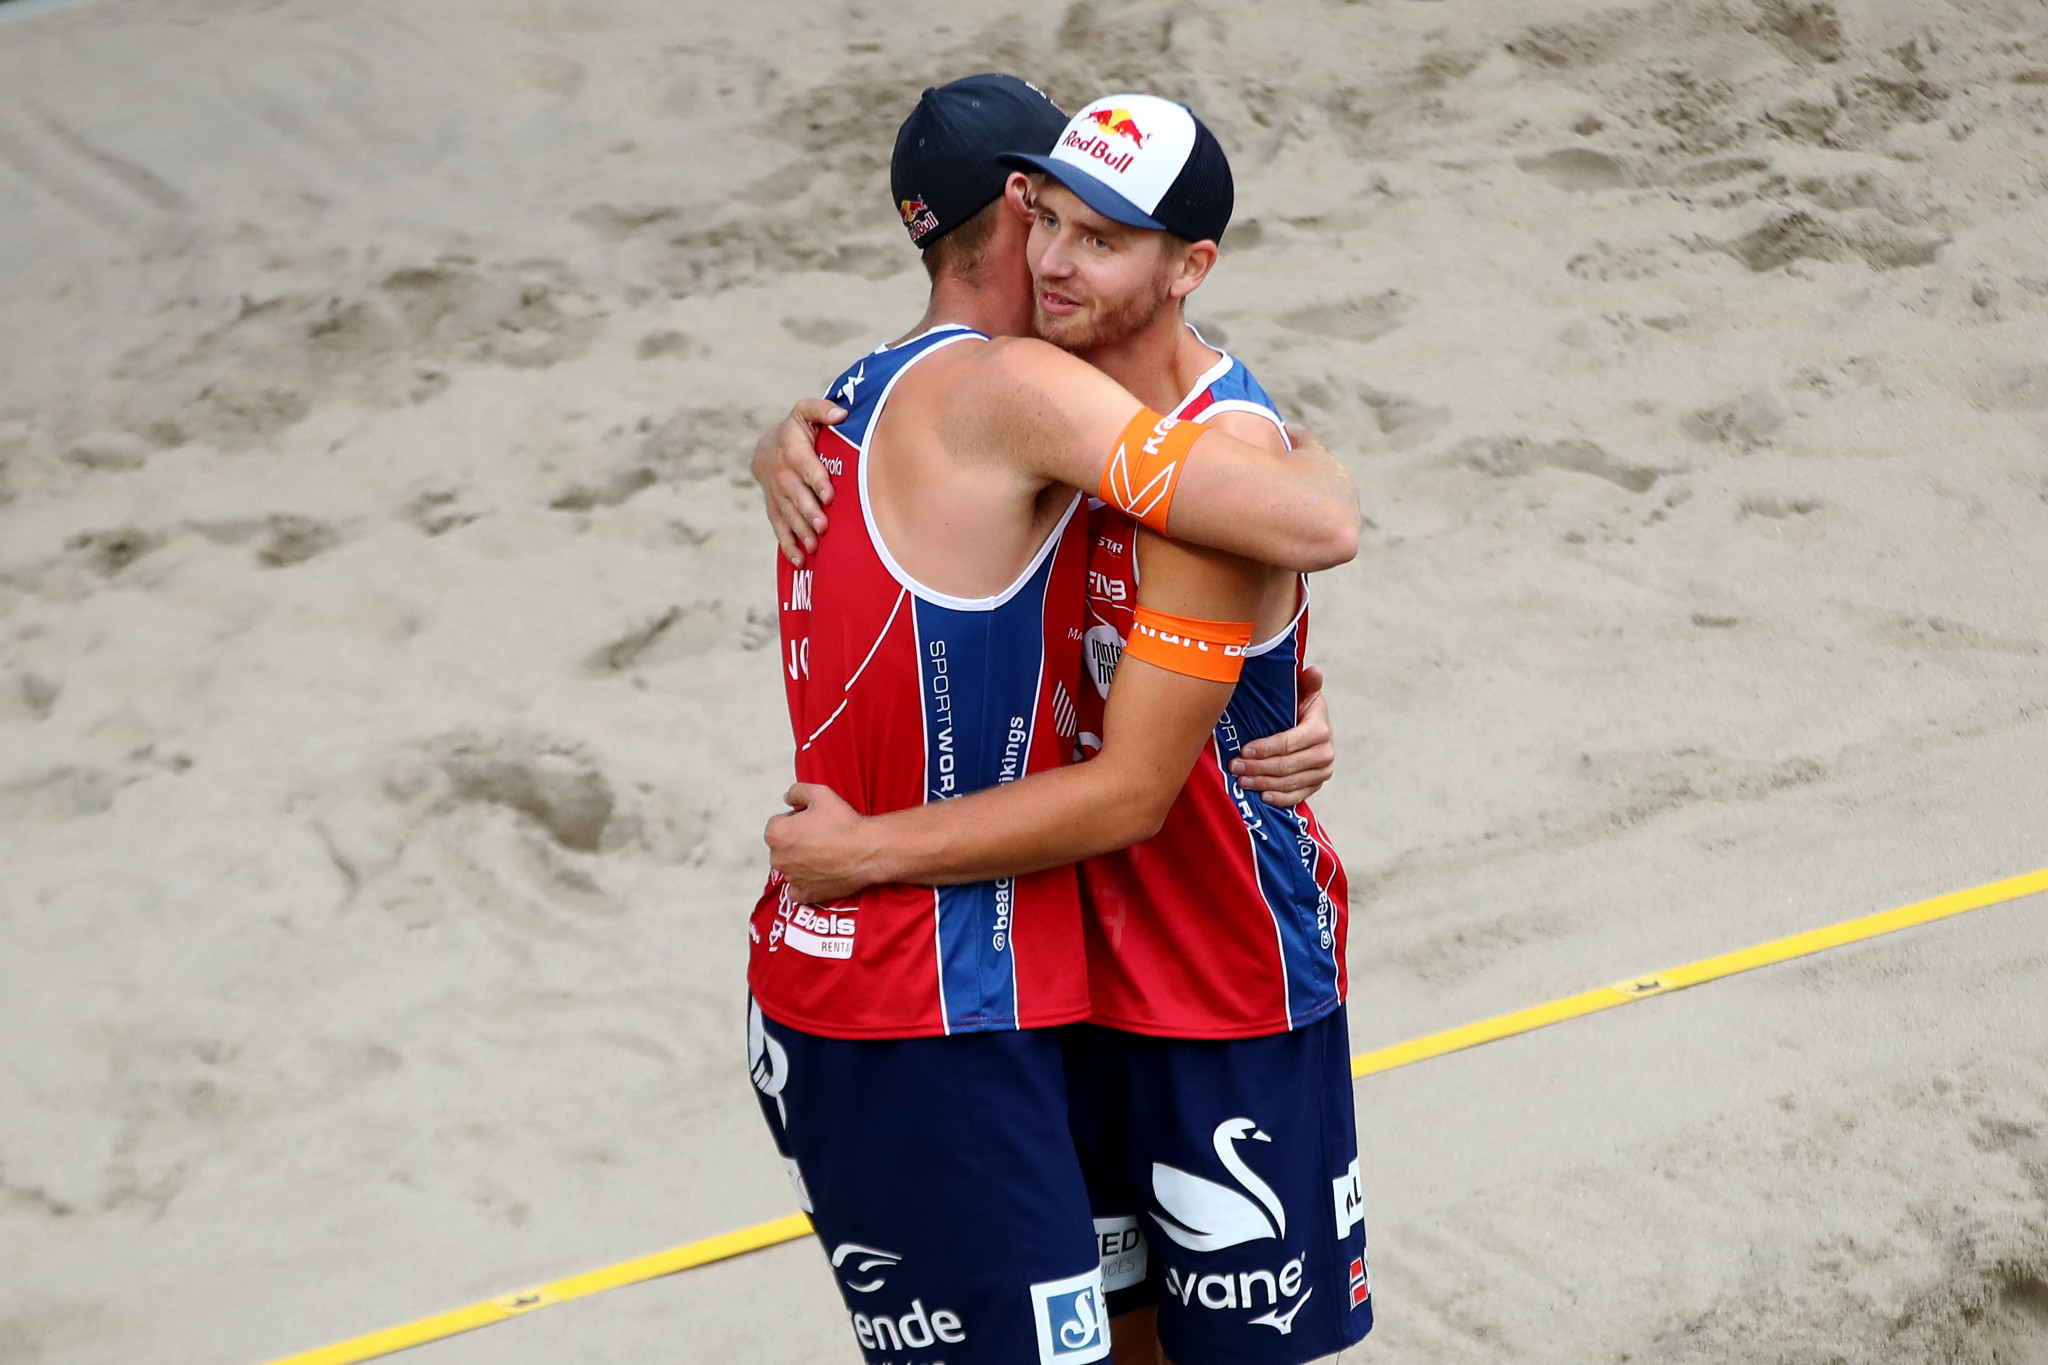 Mol-Sørum and Samba-Tijan set for final rematch at Beach Volleyball World Tour